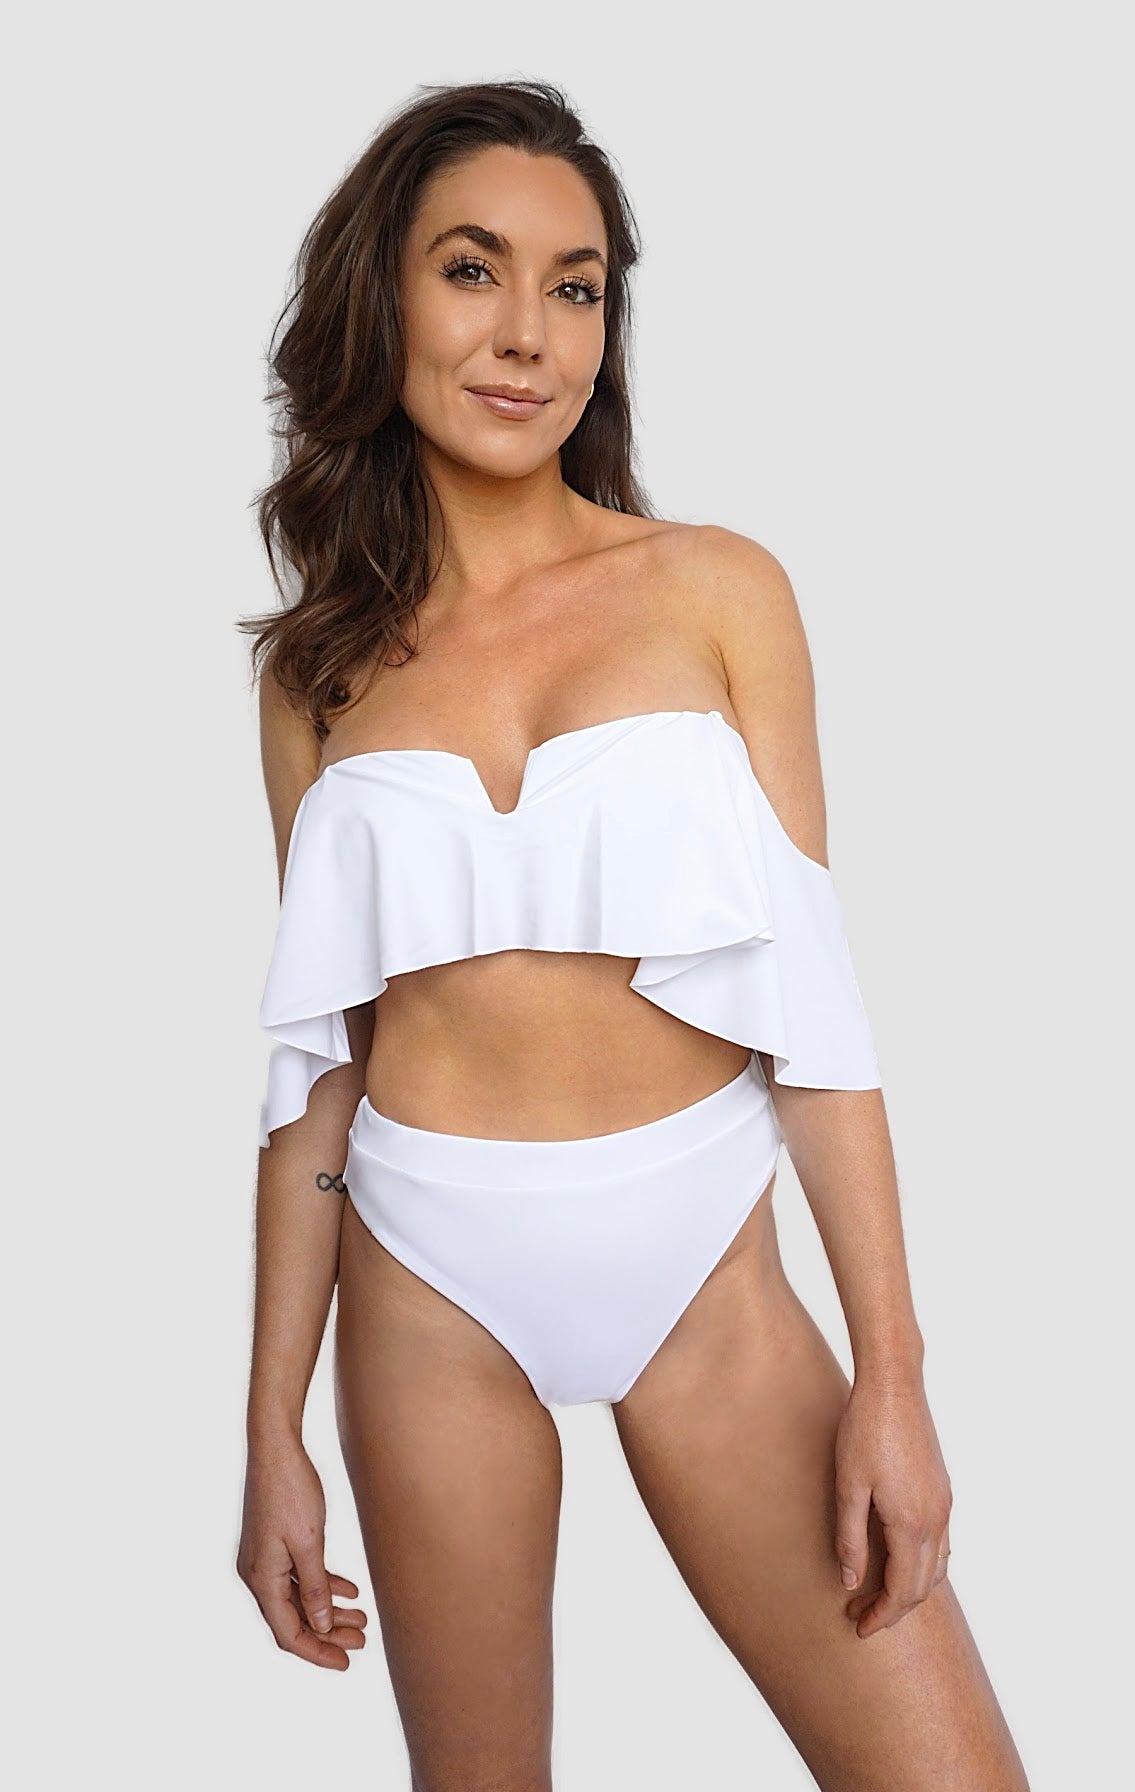 Carling Liski wearing International swimwear brand Prairie Swim classy white, mix and match, high waist bikini bottom with high-cut legs for all women